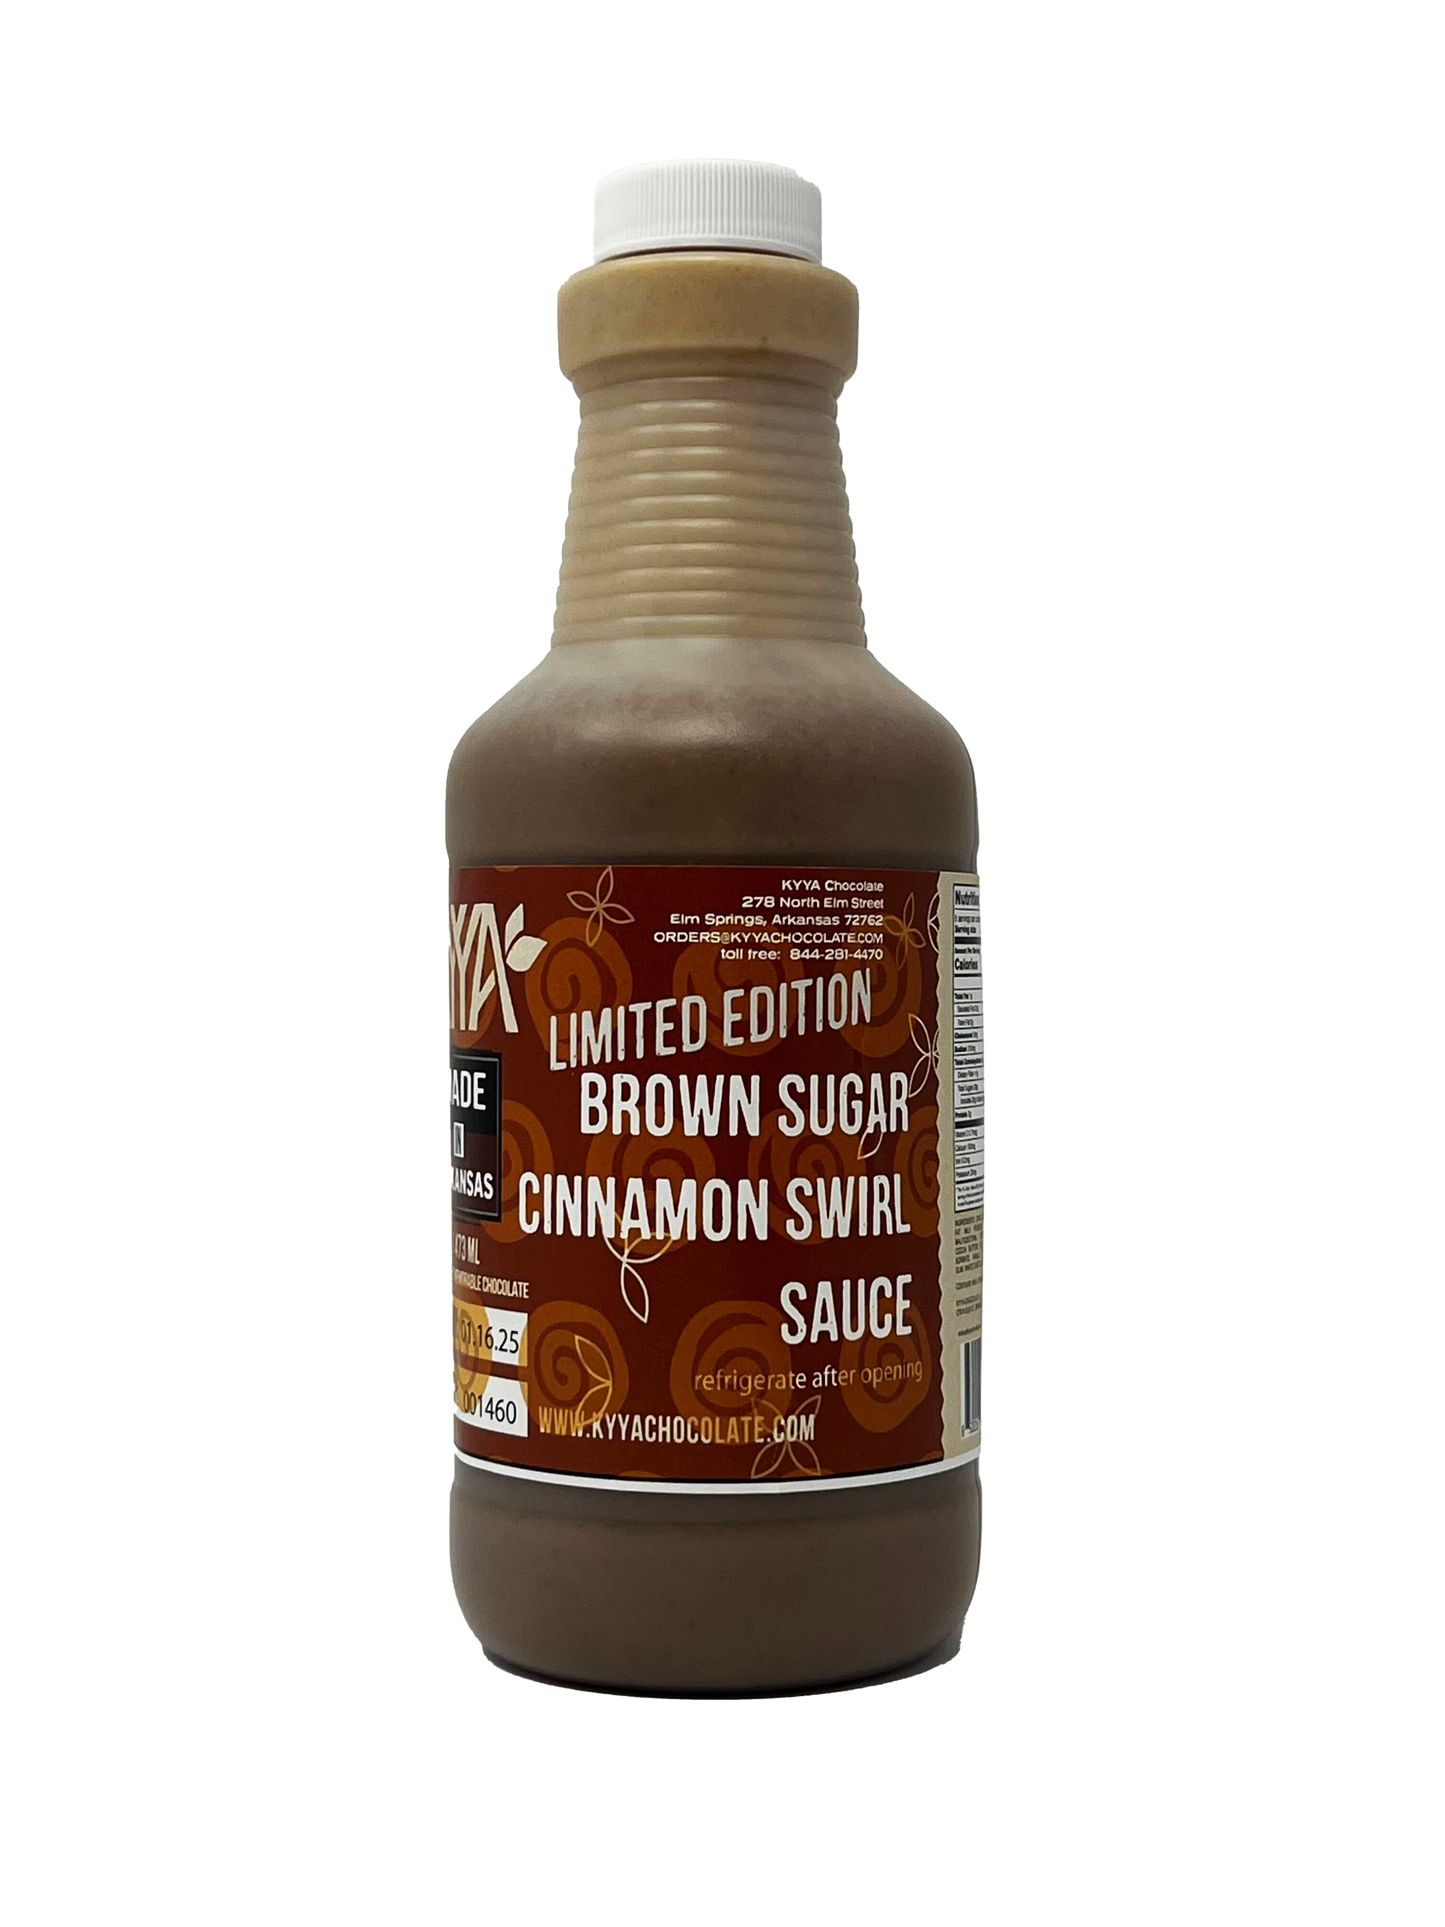 Brown Sugar Cinnamon Swirl Sauce